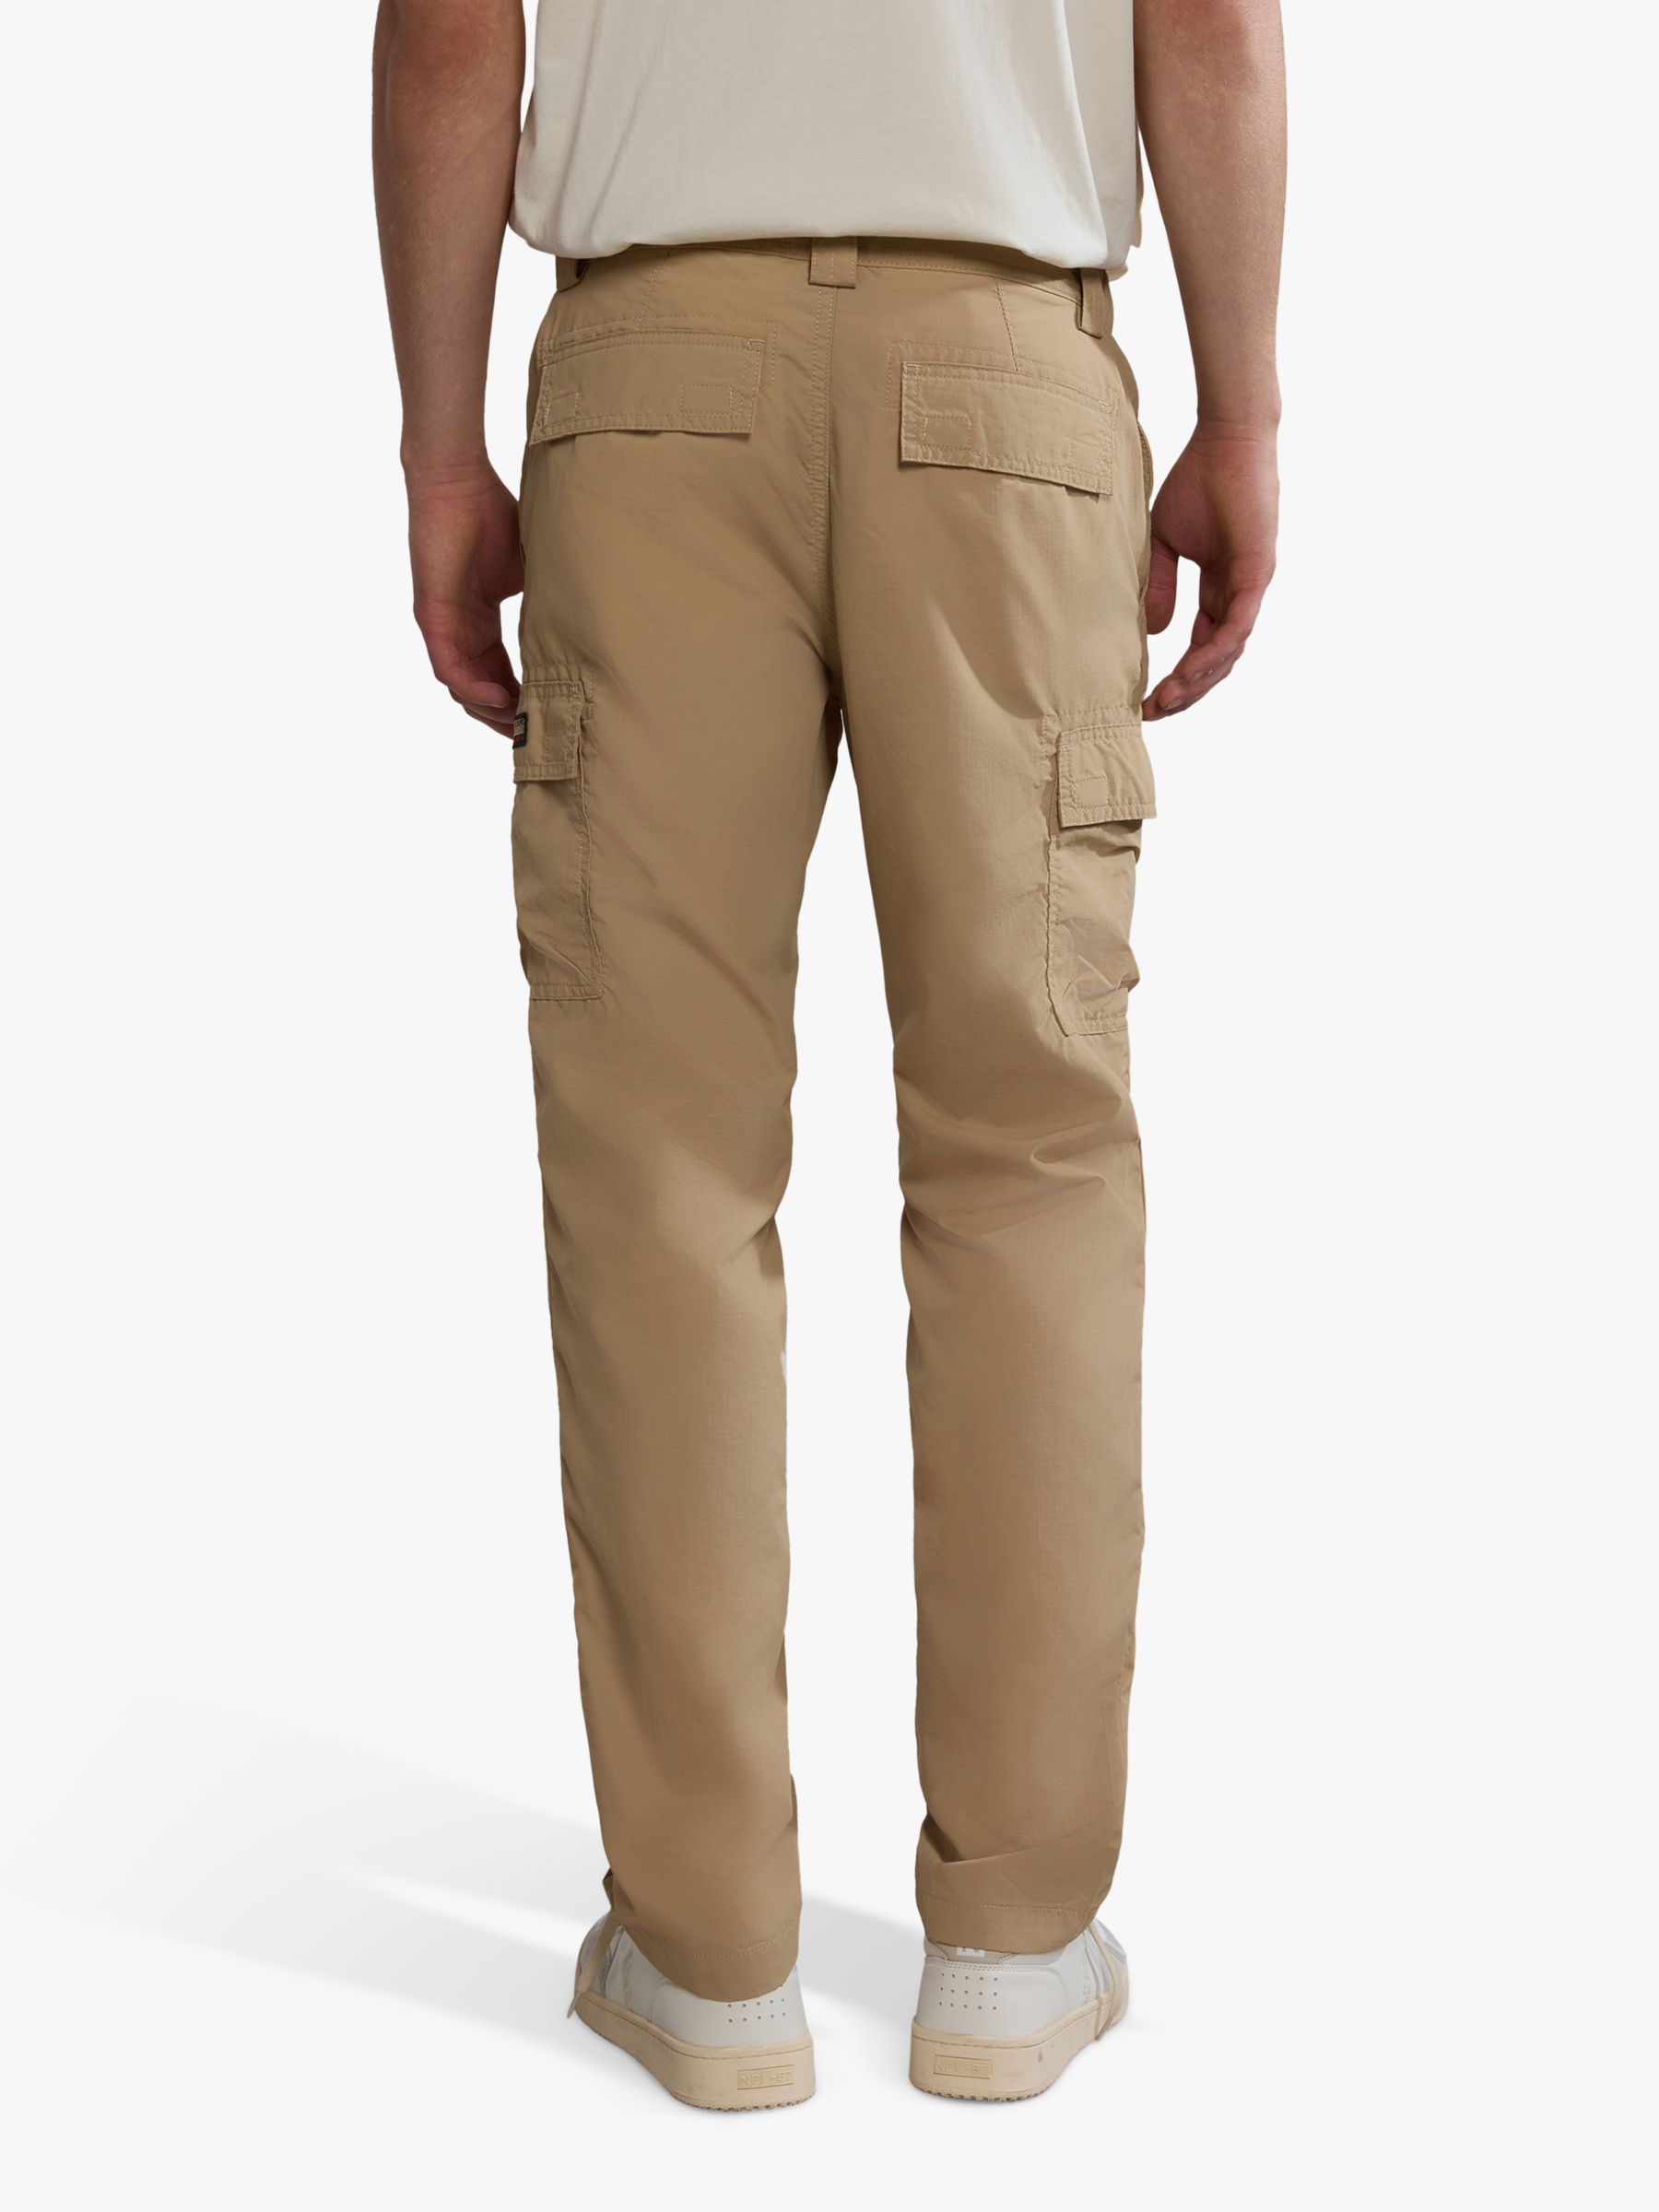 Napapijri Faber Cargo Trousers, Beige, 38R